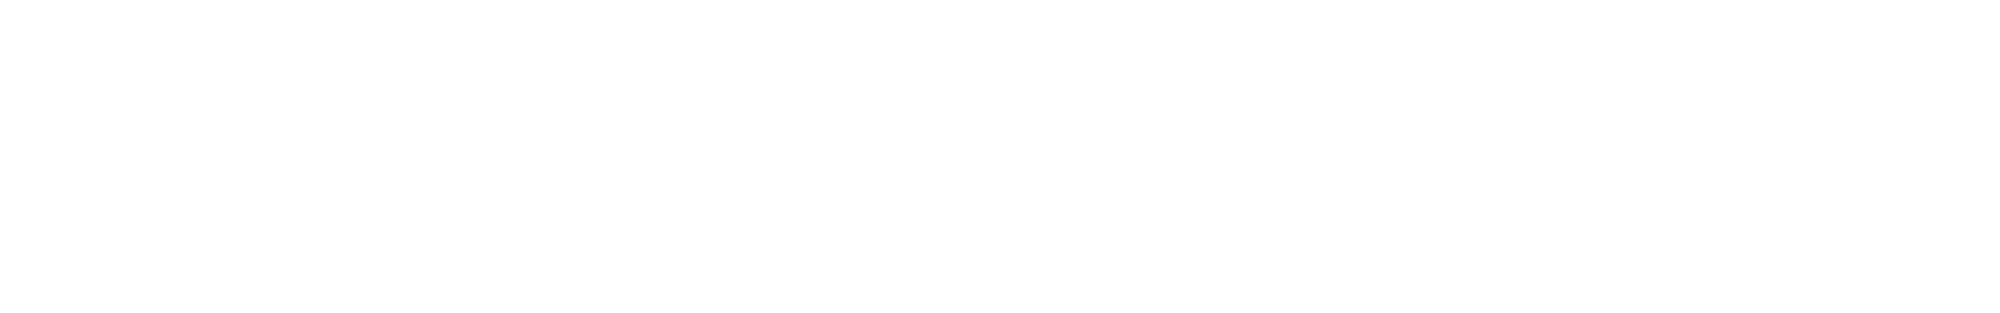 michelob ultra logo